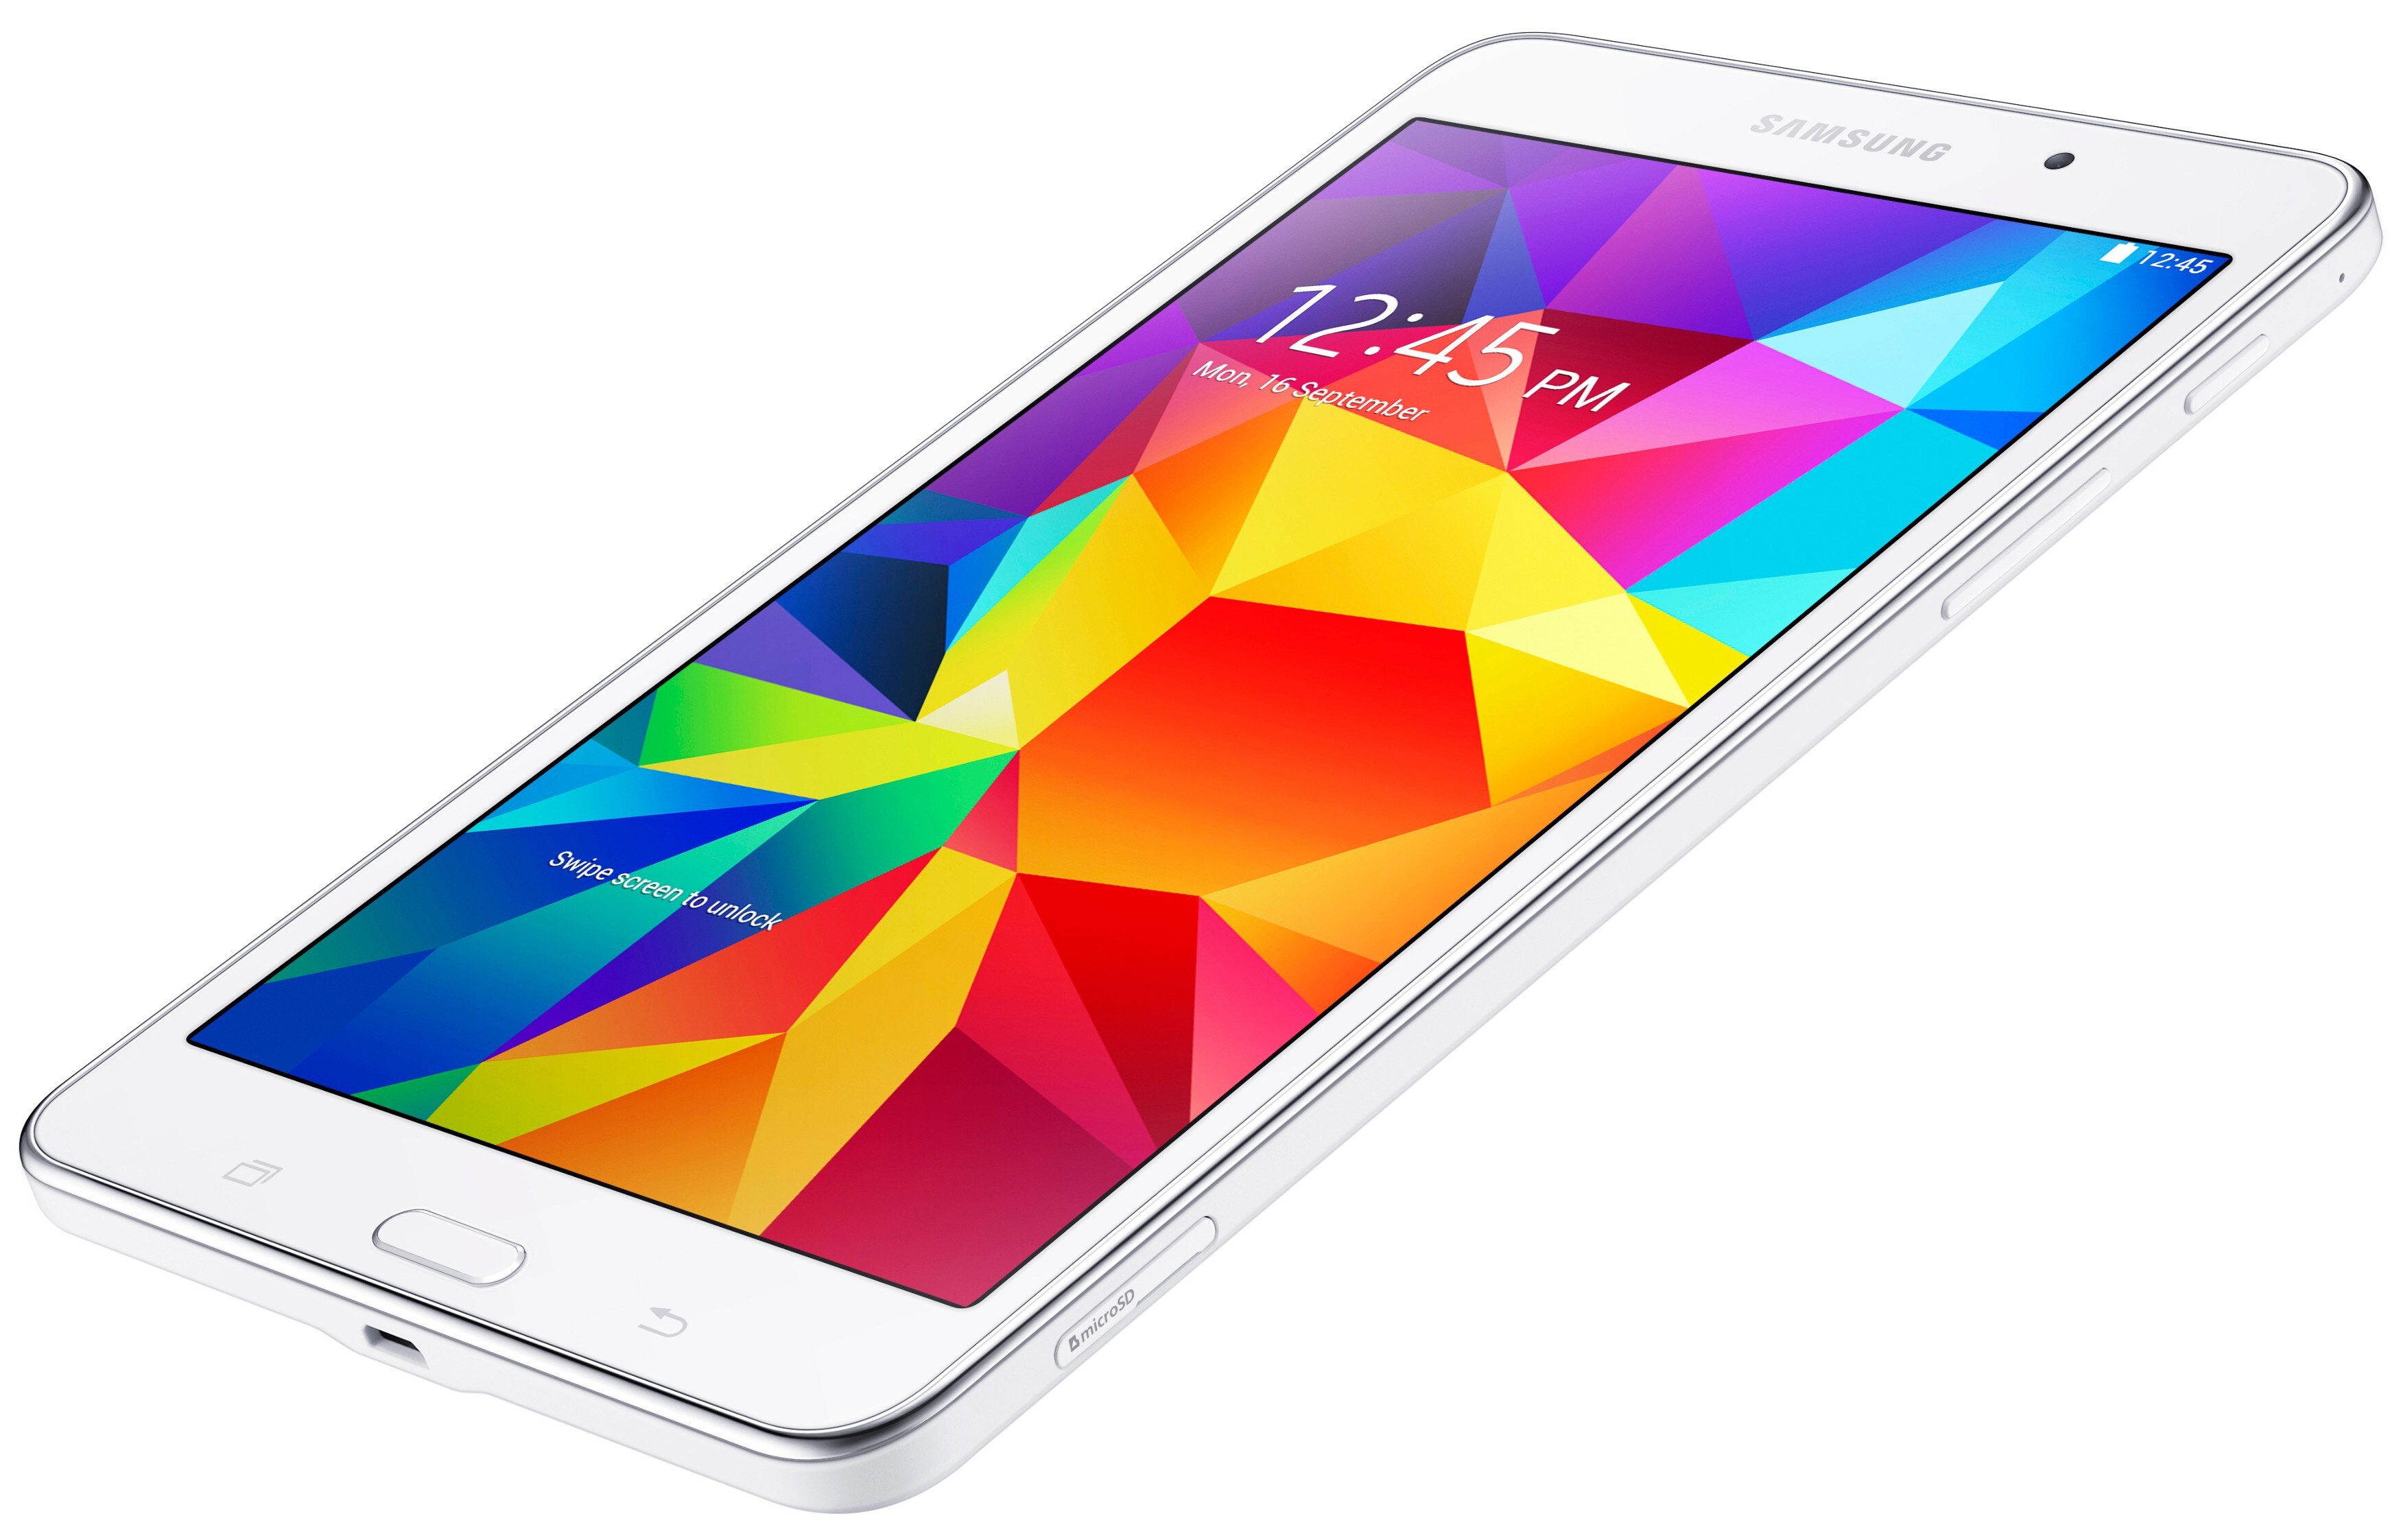 Samsung Galaxy Tab 4 7.0 Wifi 8 GB (vit) - iPad, Surfplatta ...